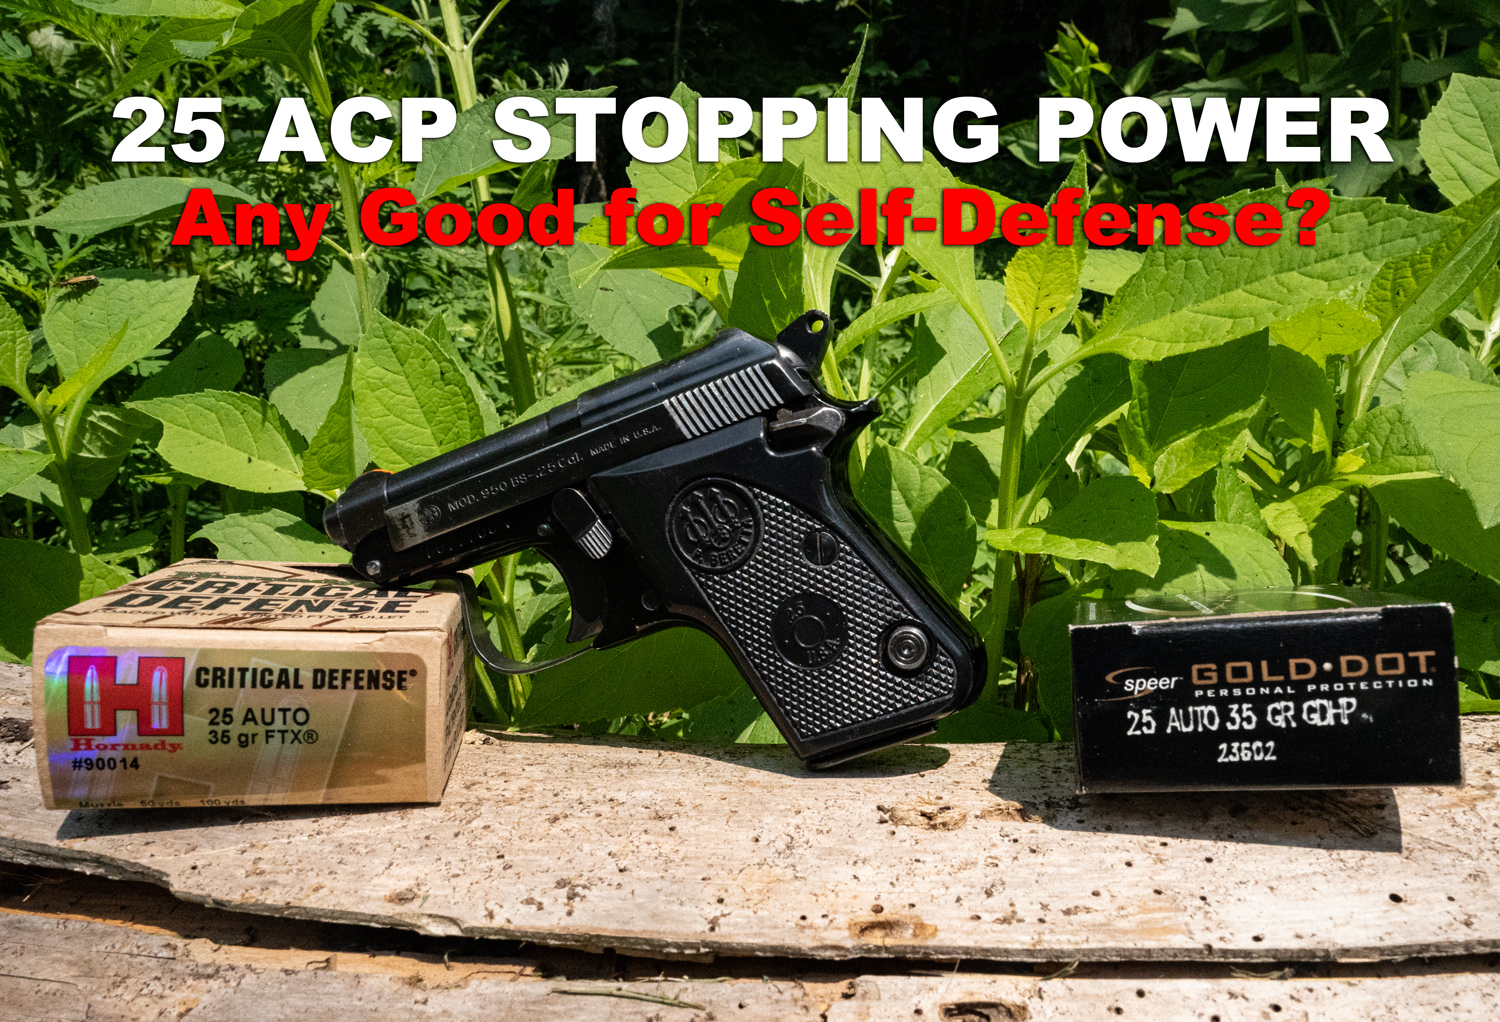 25 ACP pistol with ammo on display